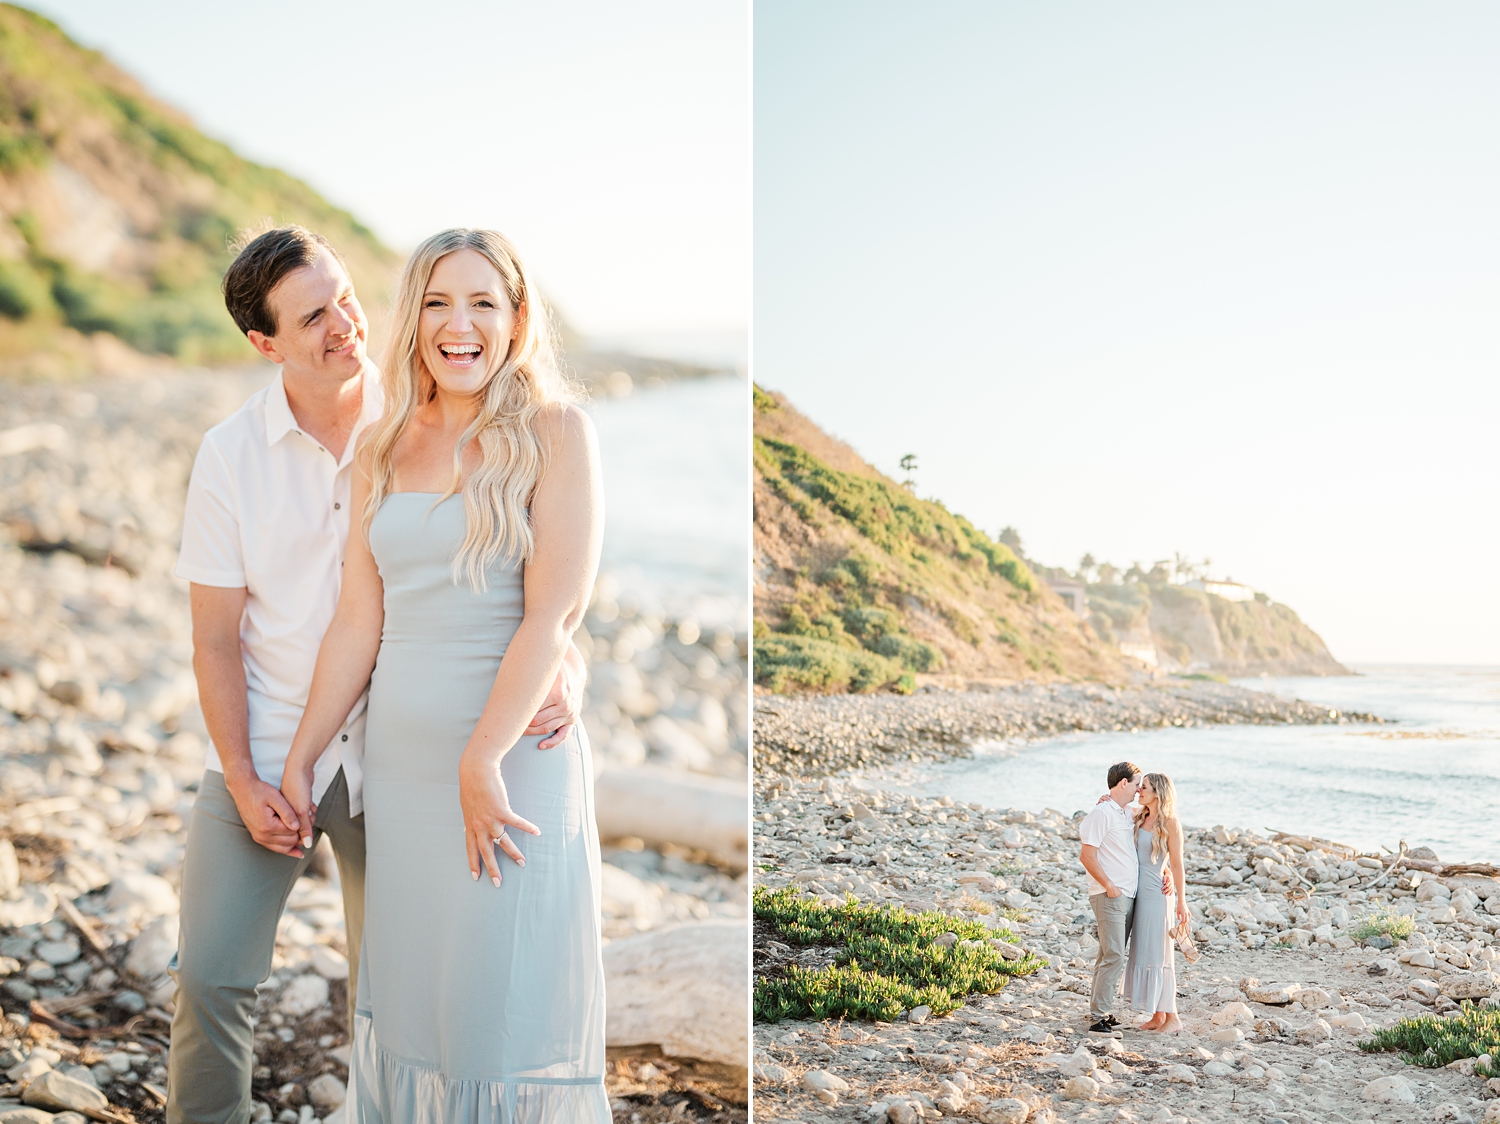 Nataly Hernandez Photography | Palos Verdes Estates Engagement Session | Romantic | Beach | Sunset | Film | Editorial | Fine Art Wedding Photographer -64.jpg